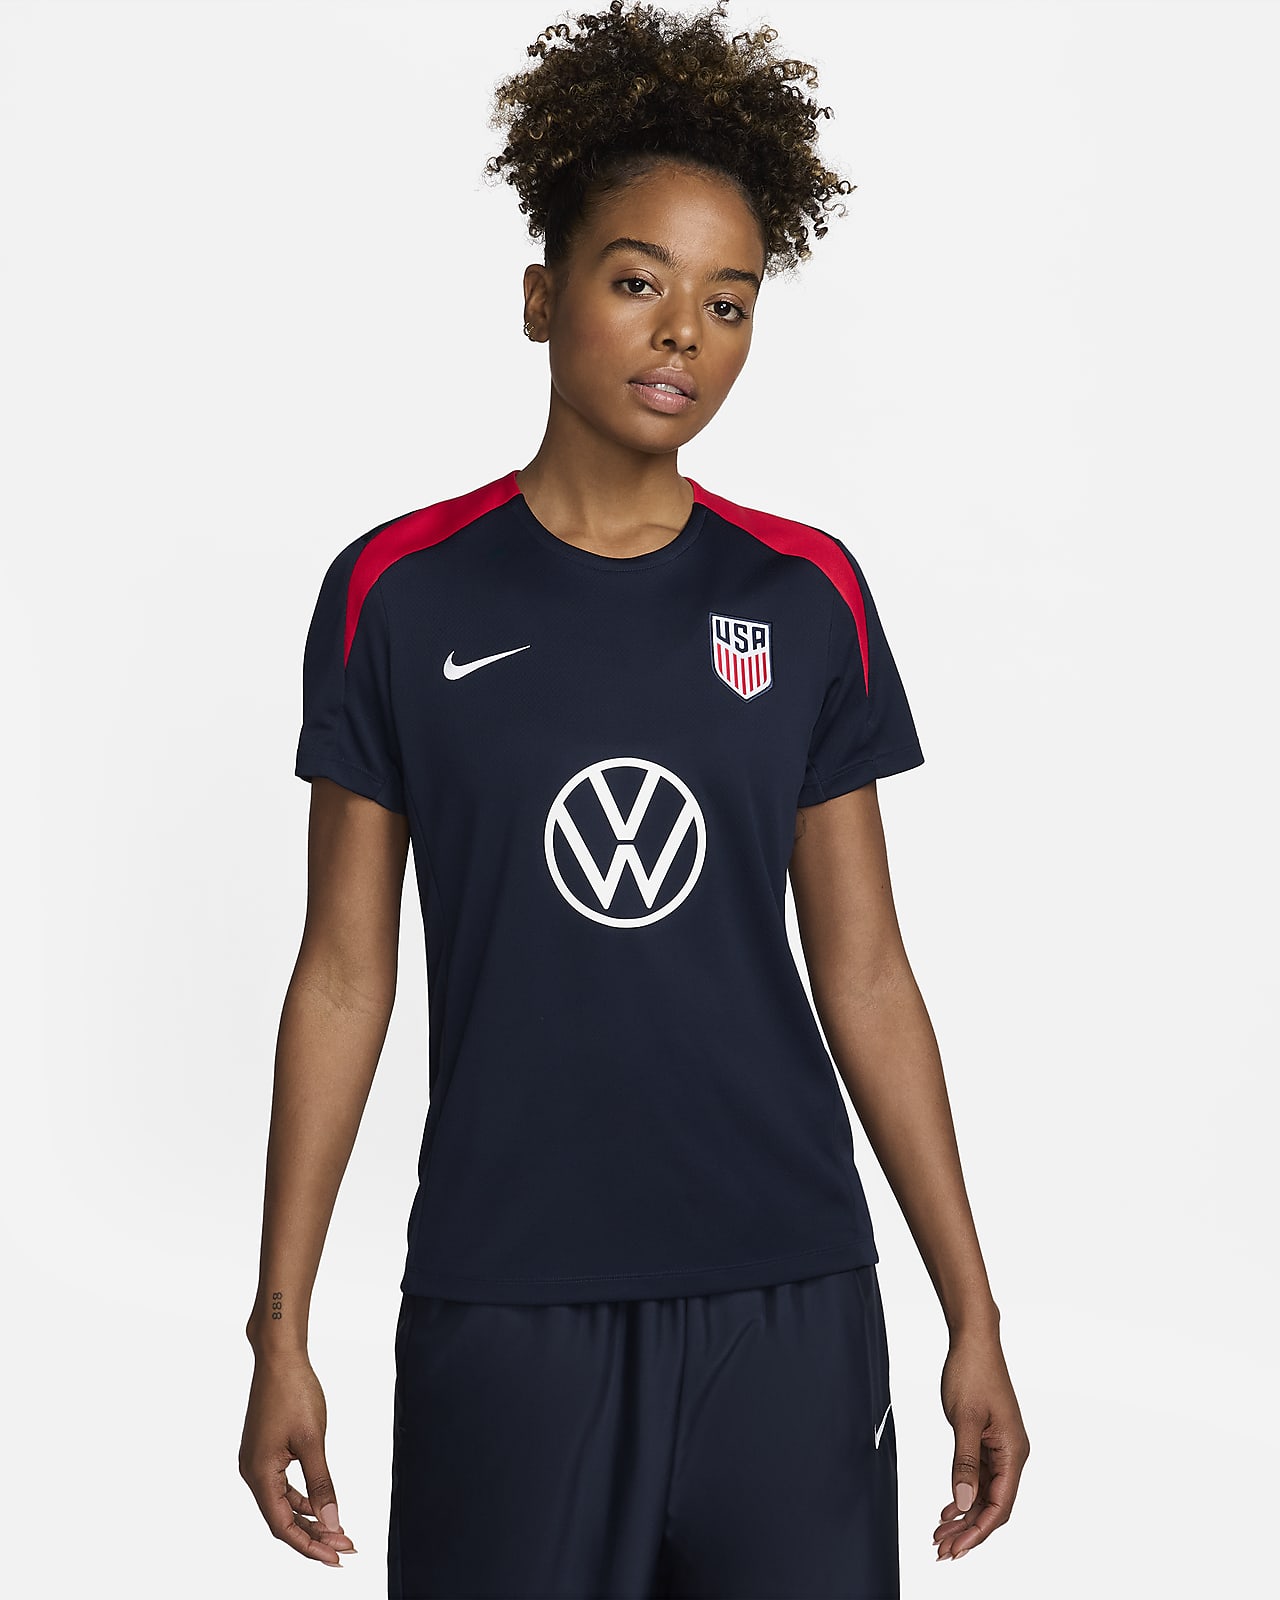 USMNT Strike Women's Nike Dri-FIT Soccer Short-Sleeve Knit Top